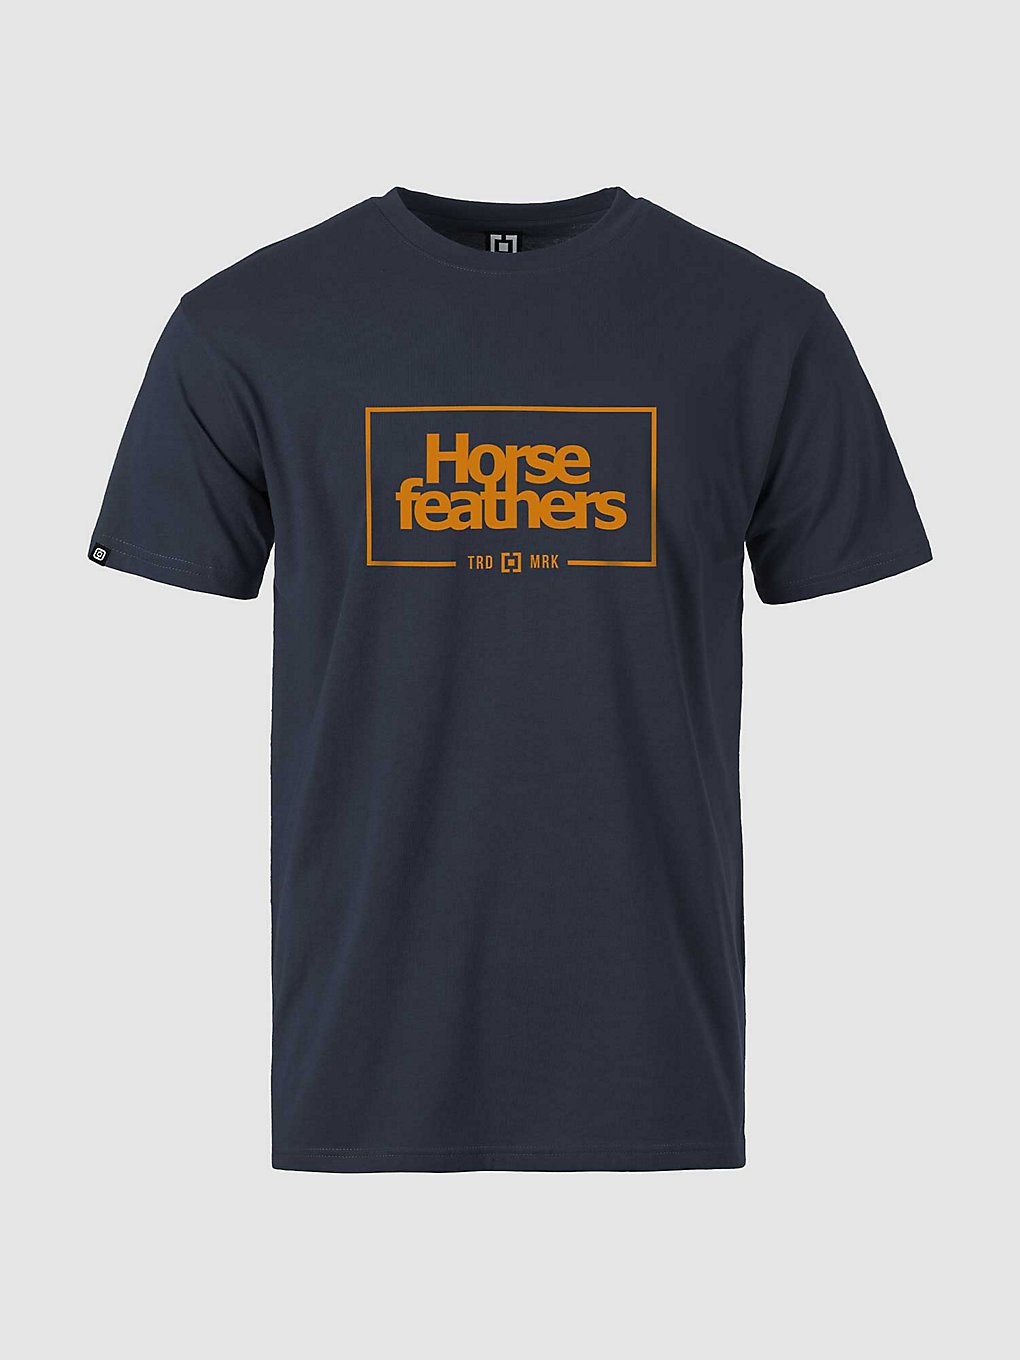 Horsefeathers Label T-Shirt midnight navy kaufen